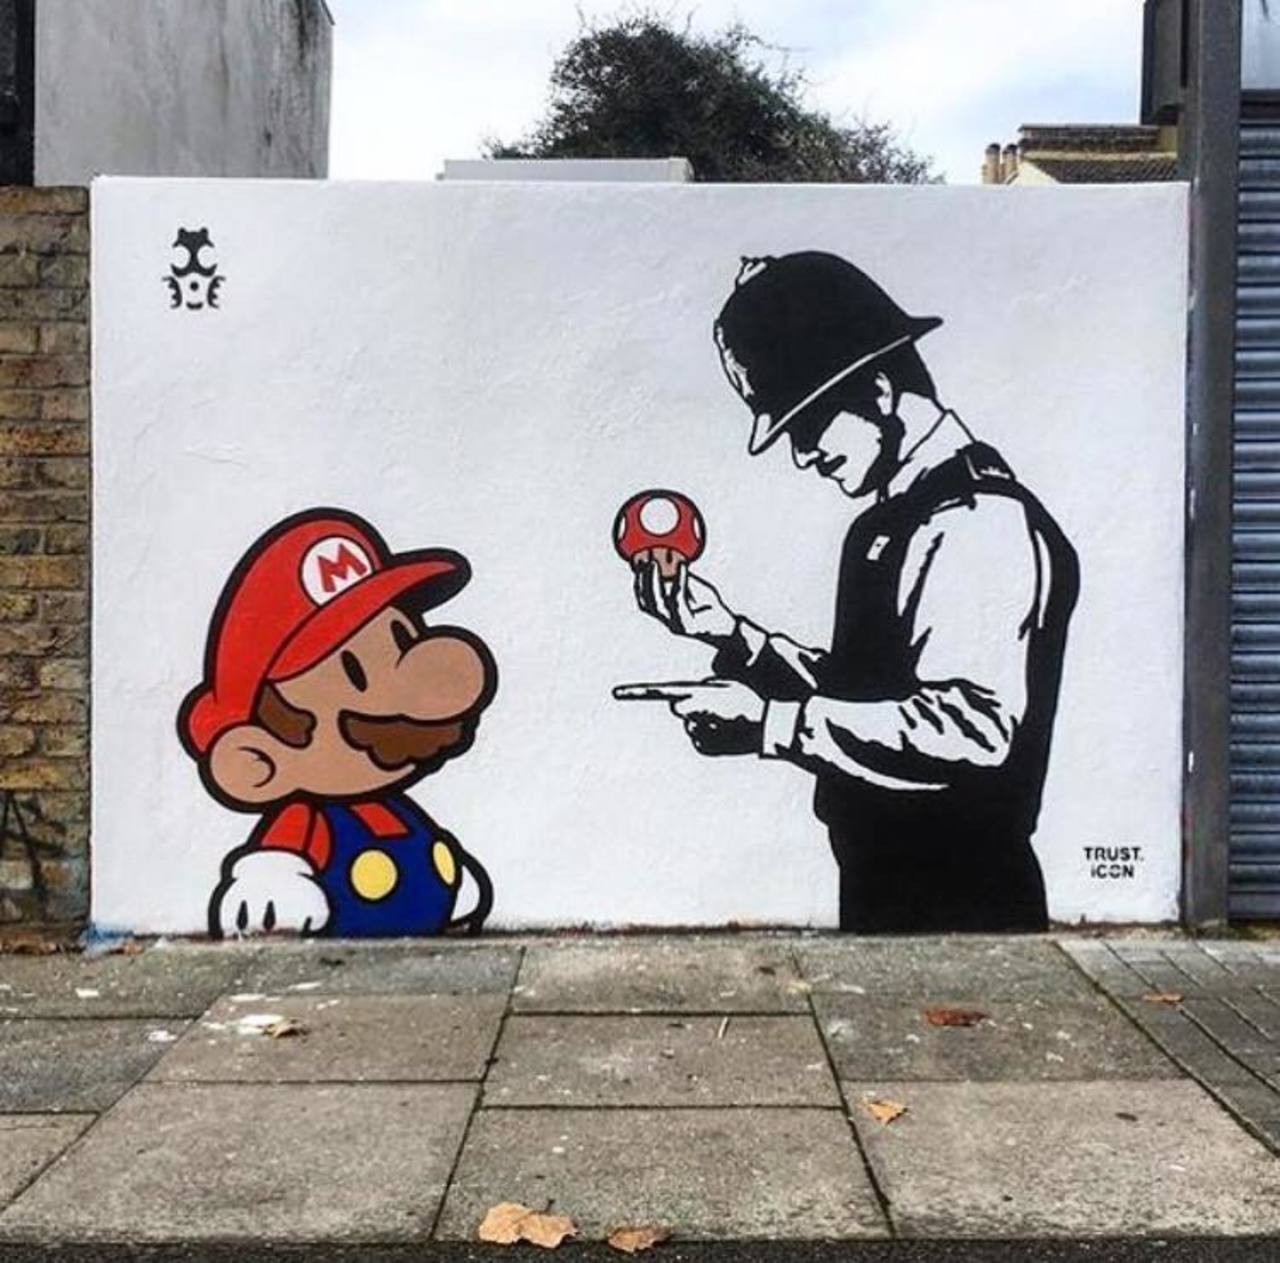 Piece by @trust_icon (supported by @Ldncallingblog) in #Penge, #London! -- #globalstreetart #streetart #art #graffiti https://t.co/EoVzvnzkMs